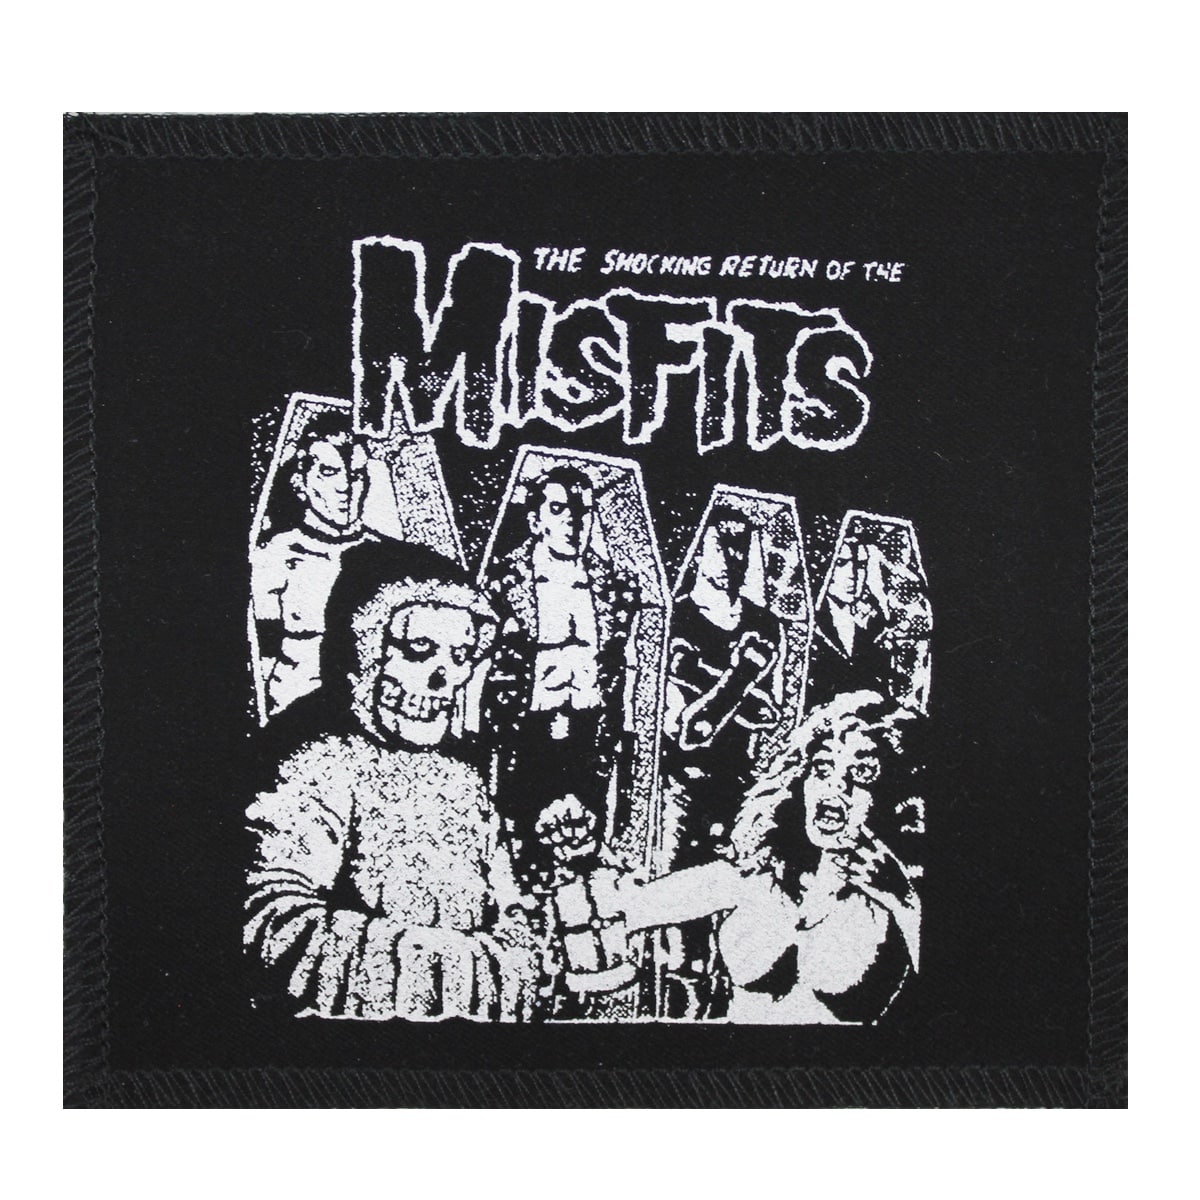 Misfits Shocking Return Cloth Patch